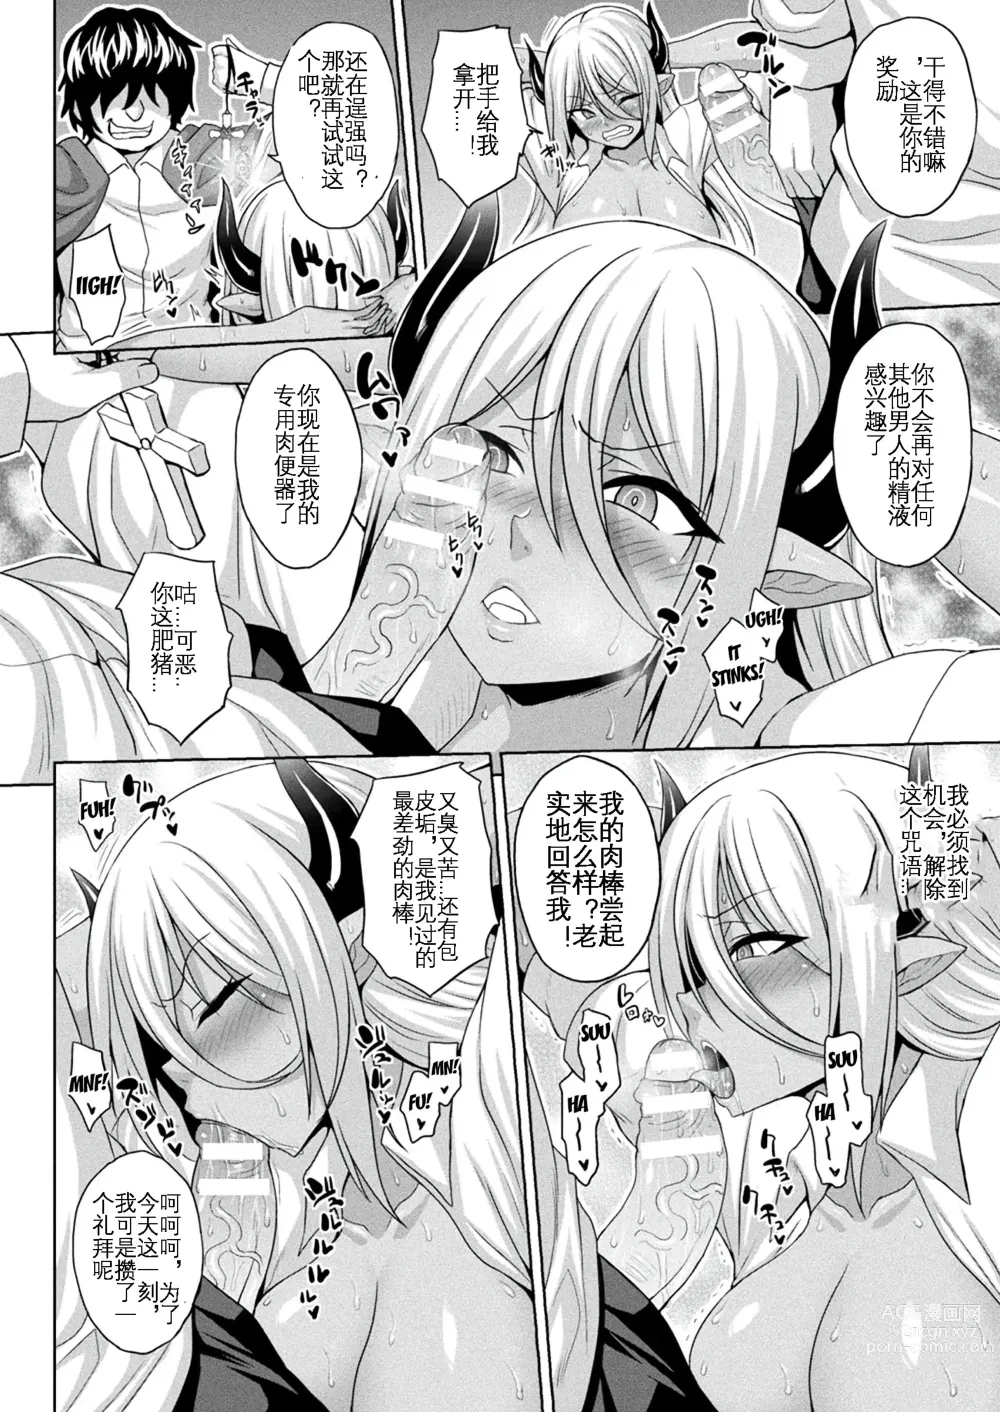 Page 5 of manga Mesubuta Inma no Chigiri - Contract of Bitch Succubus